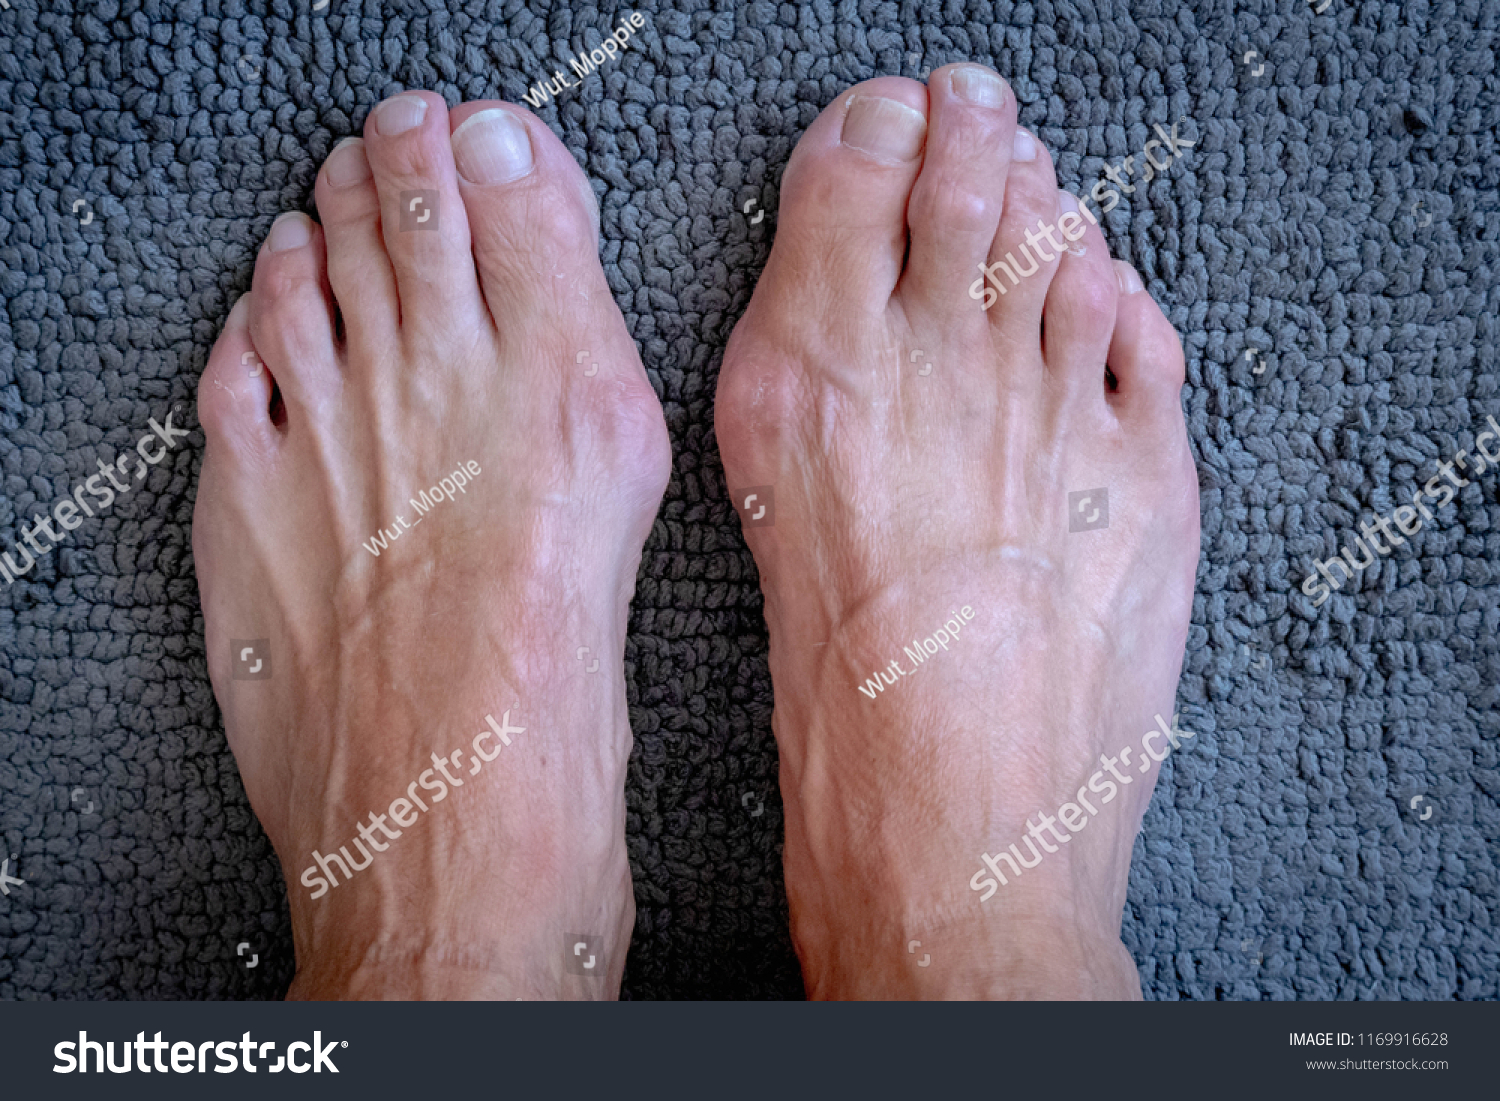 bunions on men's feet